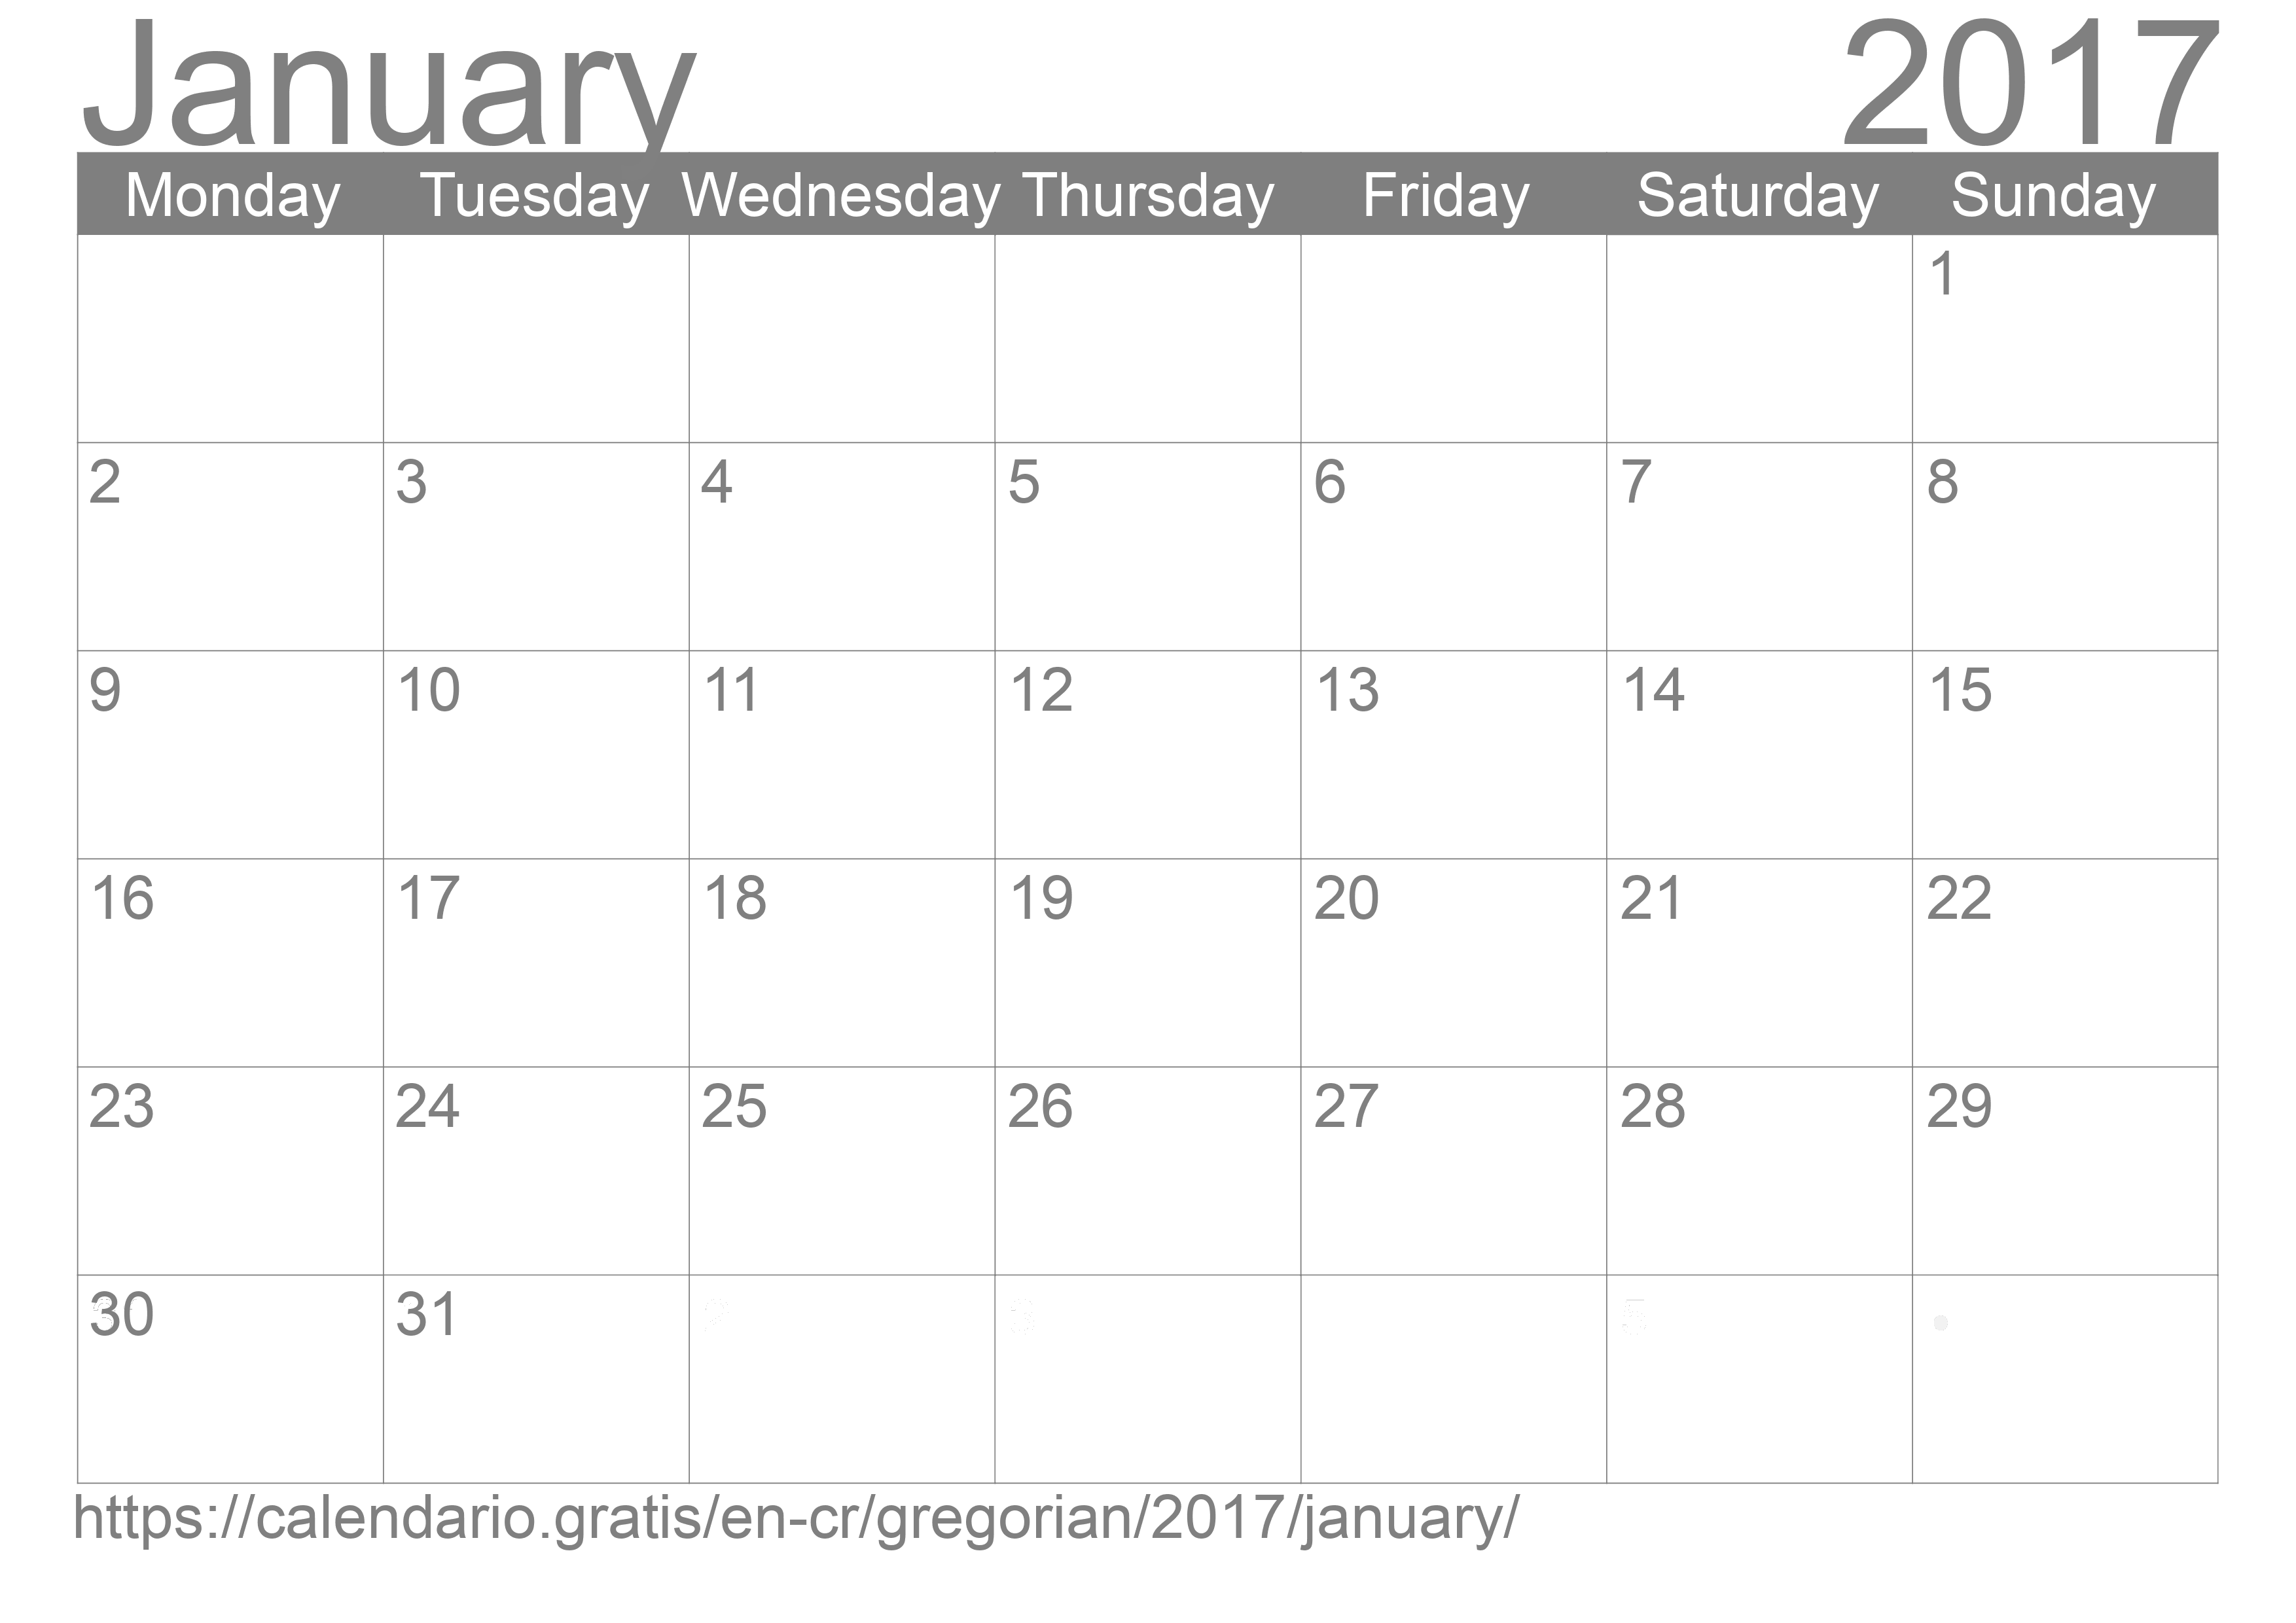 Calendar January 2017 to print